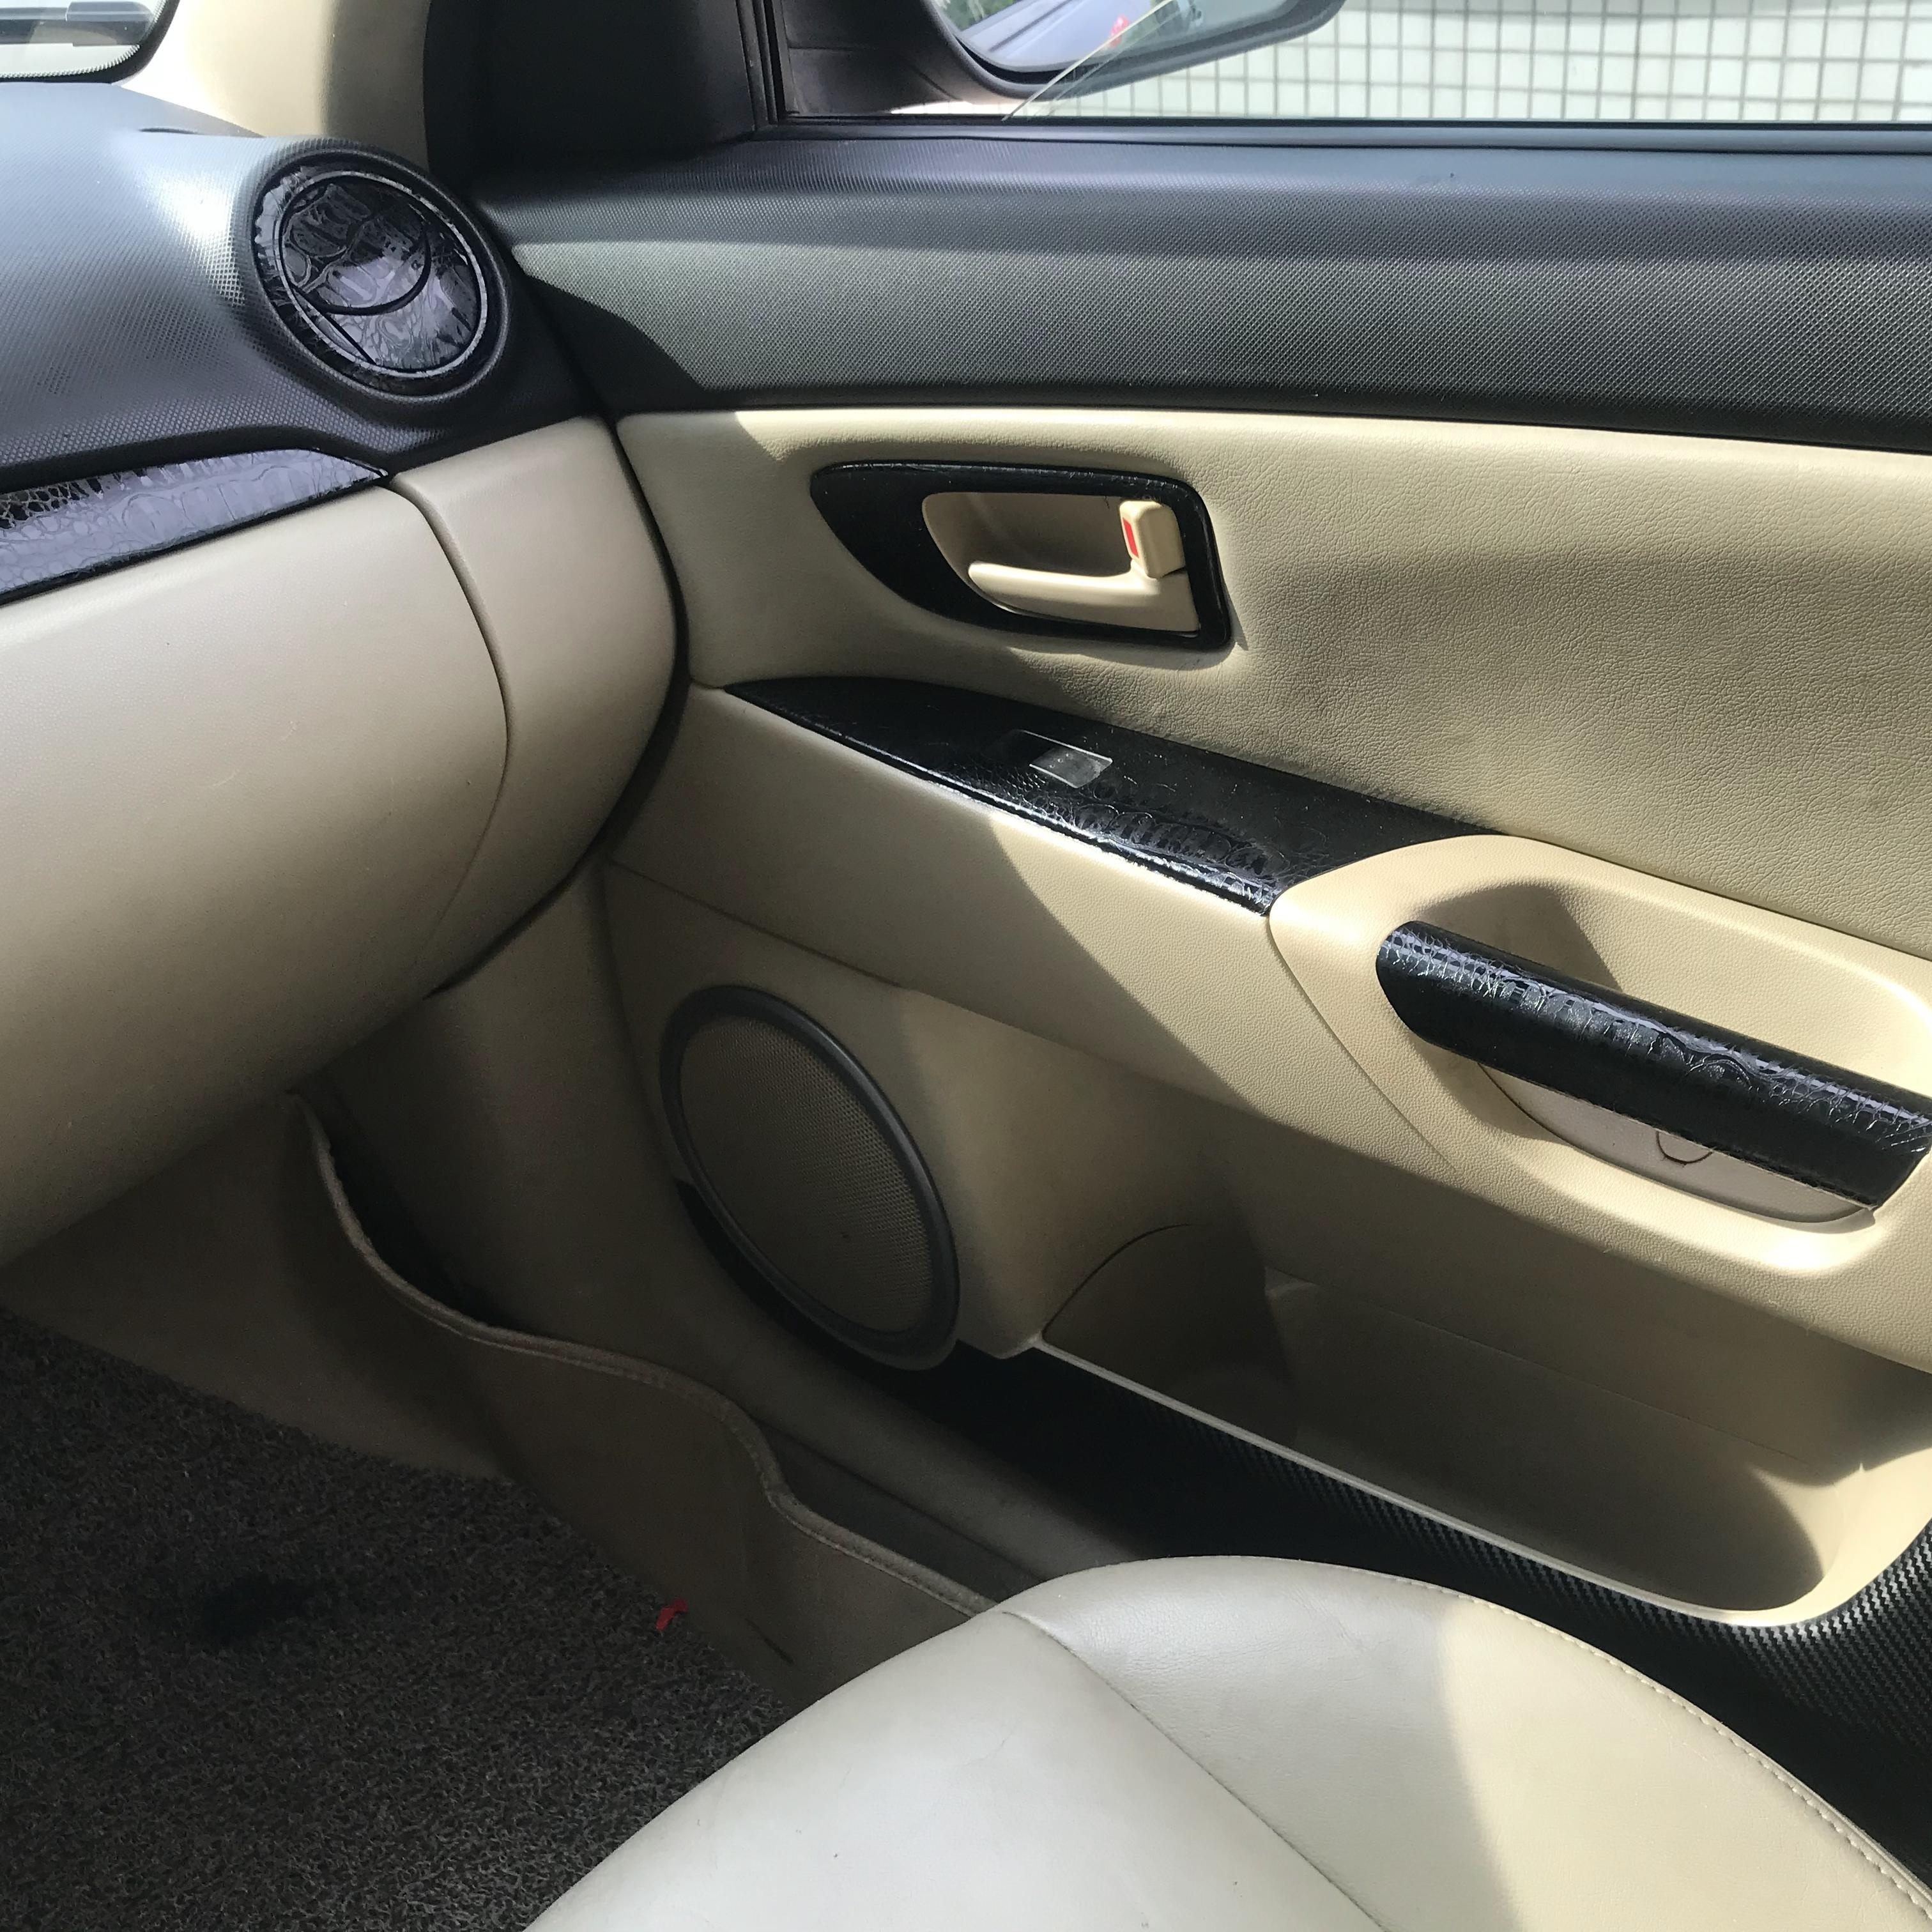 Car Interior Sticker For MAZDA 3 BN BM BP 2013-2025 Lifting Window Panel  Decal Gear Box Dashboard Protective Film Auto Accessory